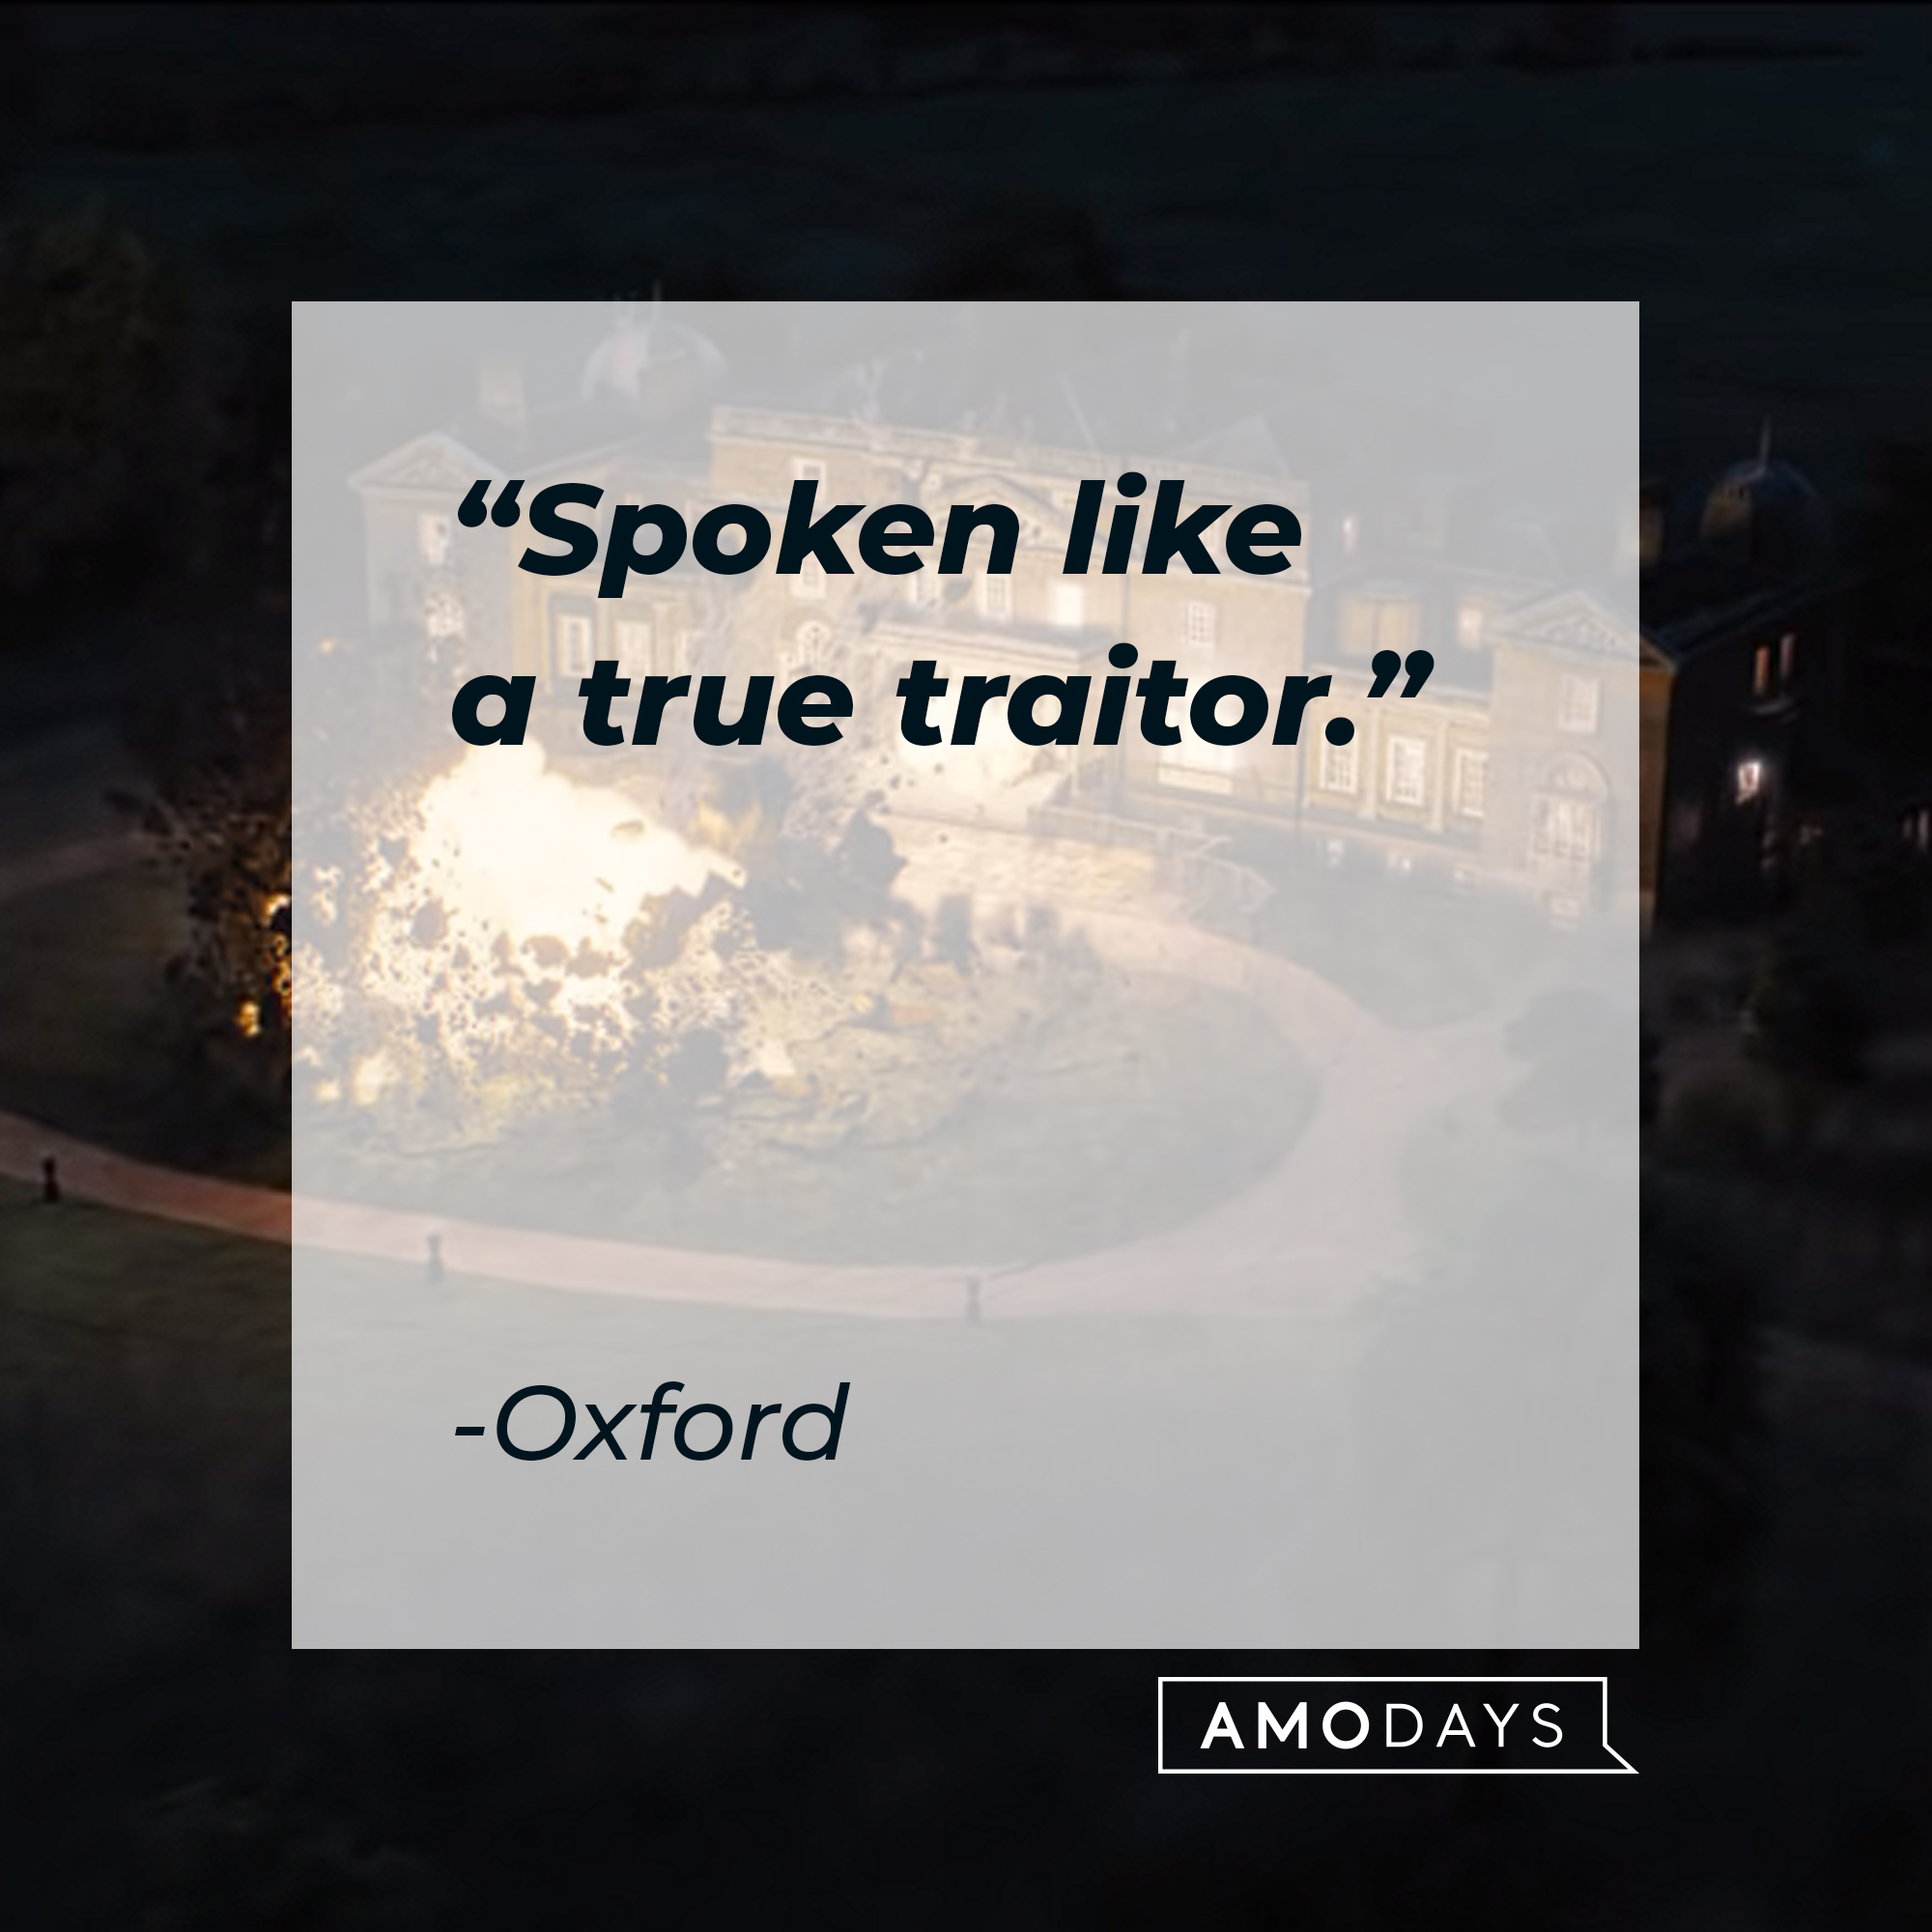 Oxford's quote: "Spoken like a true traitor" | Image: YouTube / 20thCenturyStudios